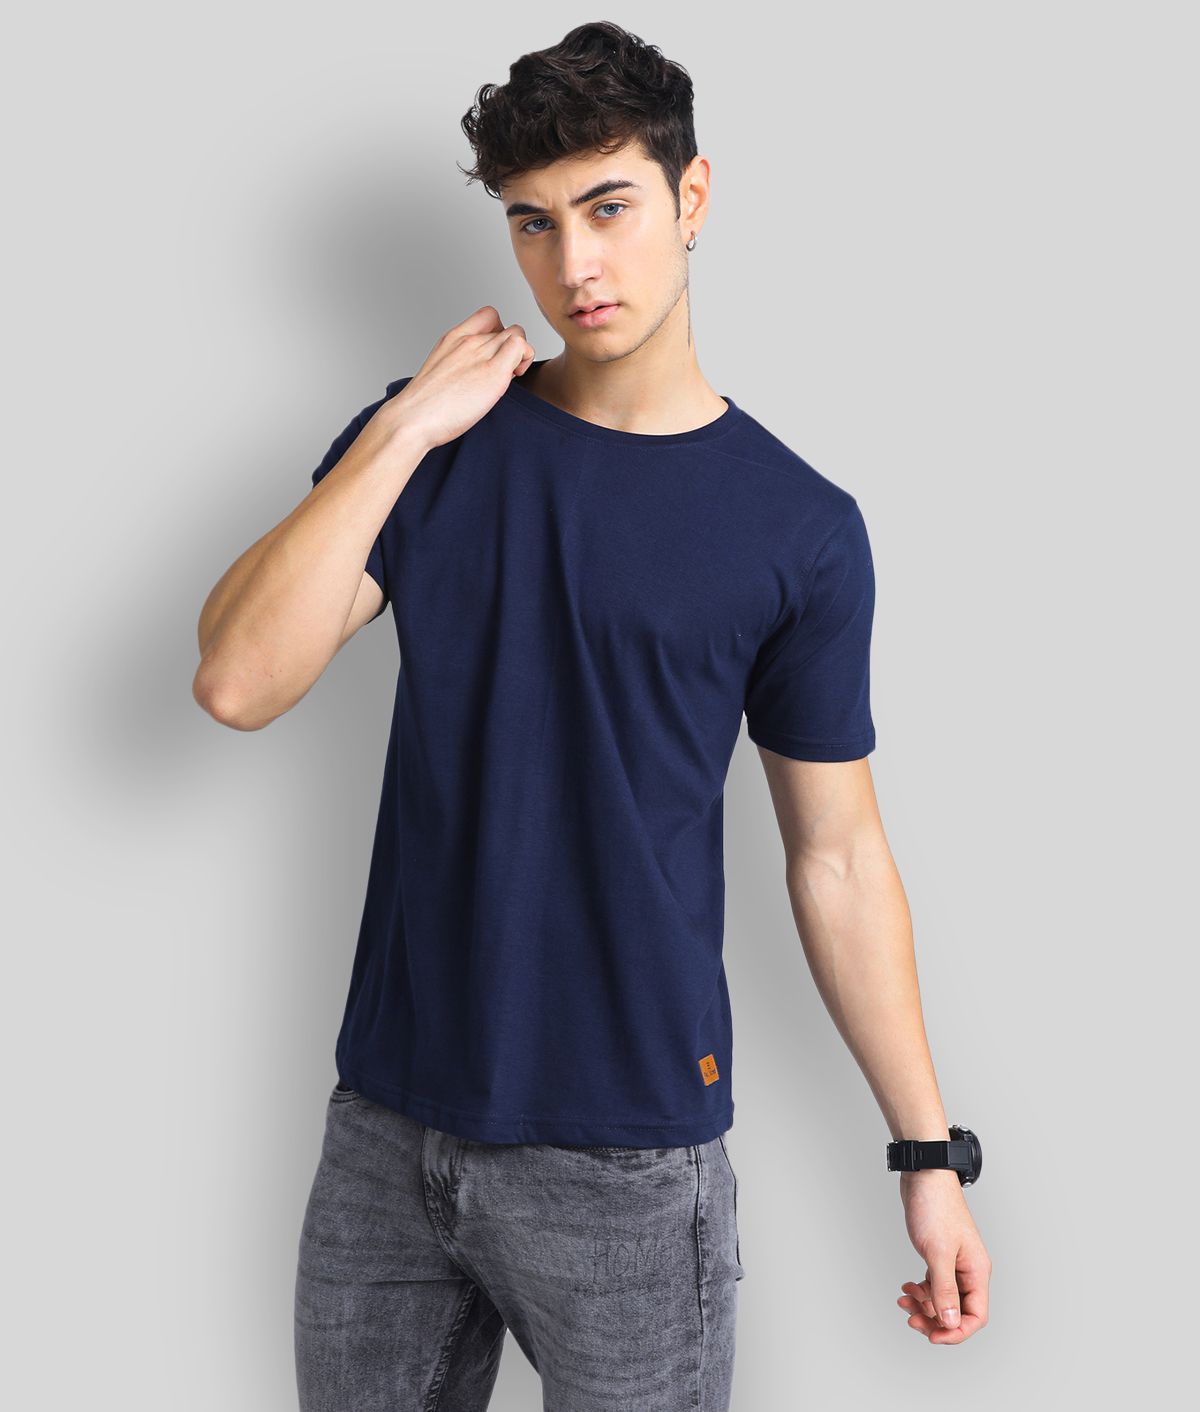     			Paul Street - Navy Blue Cotton Blend Slim Fit Men's T-Shirt ( Pack of 1 )